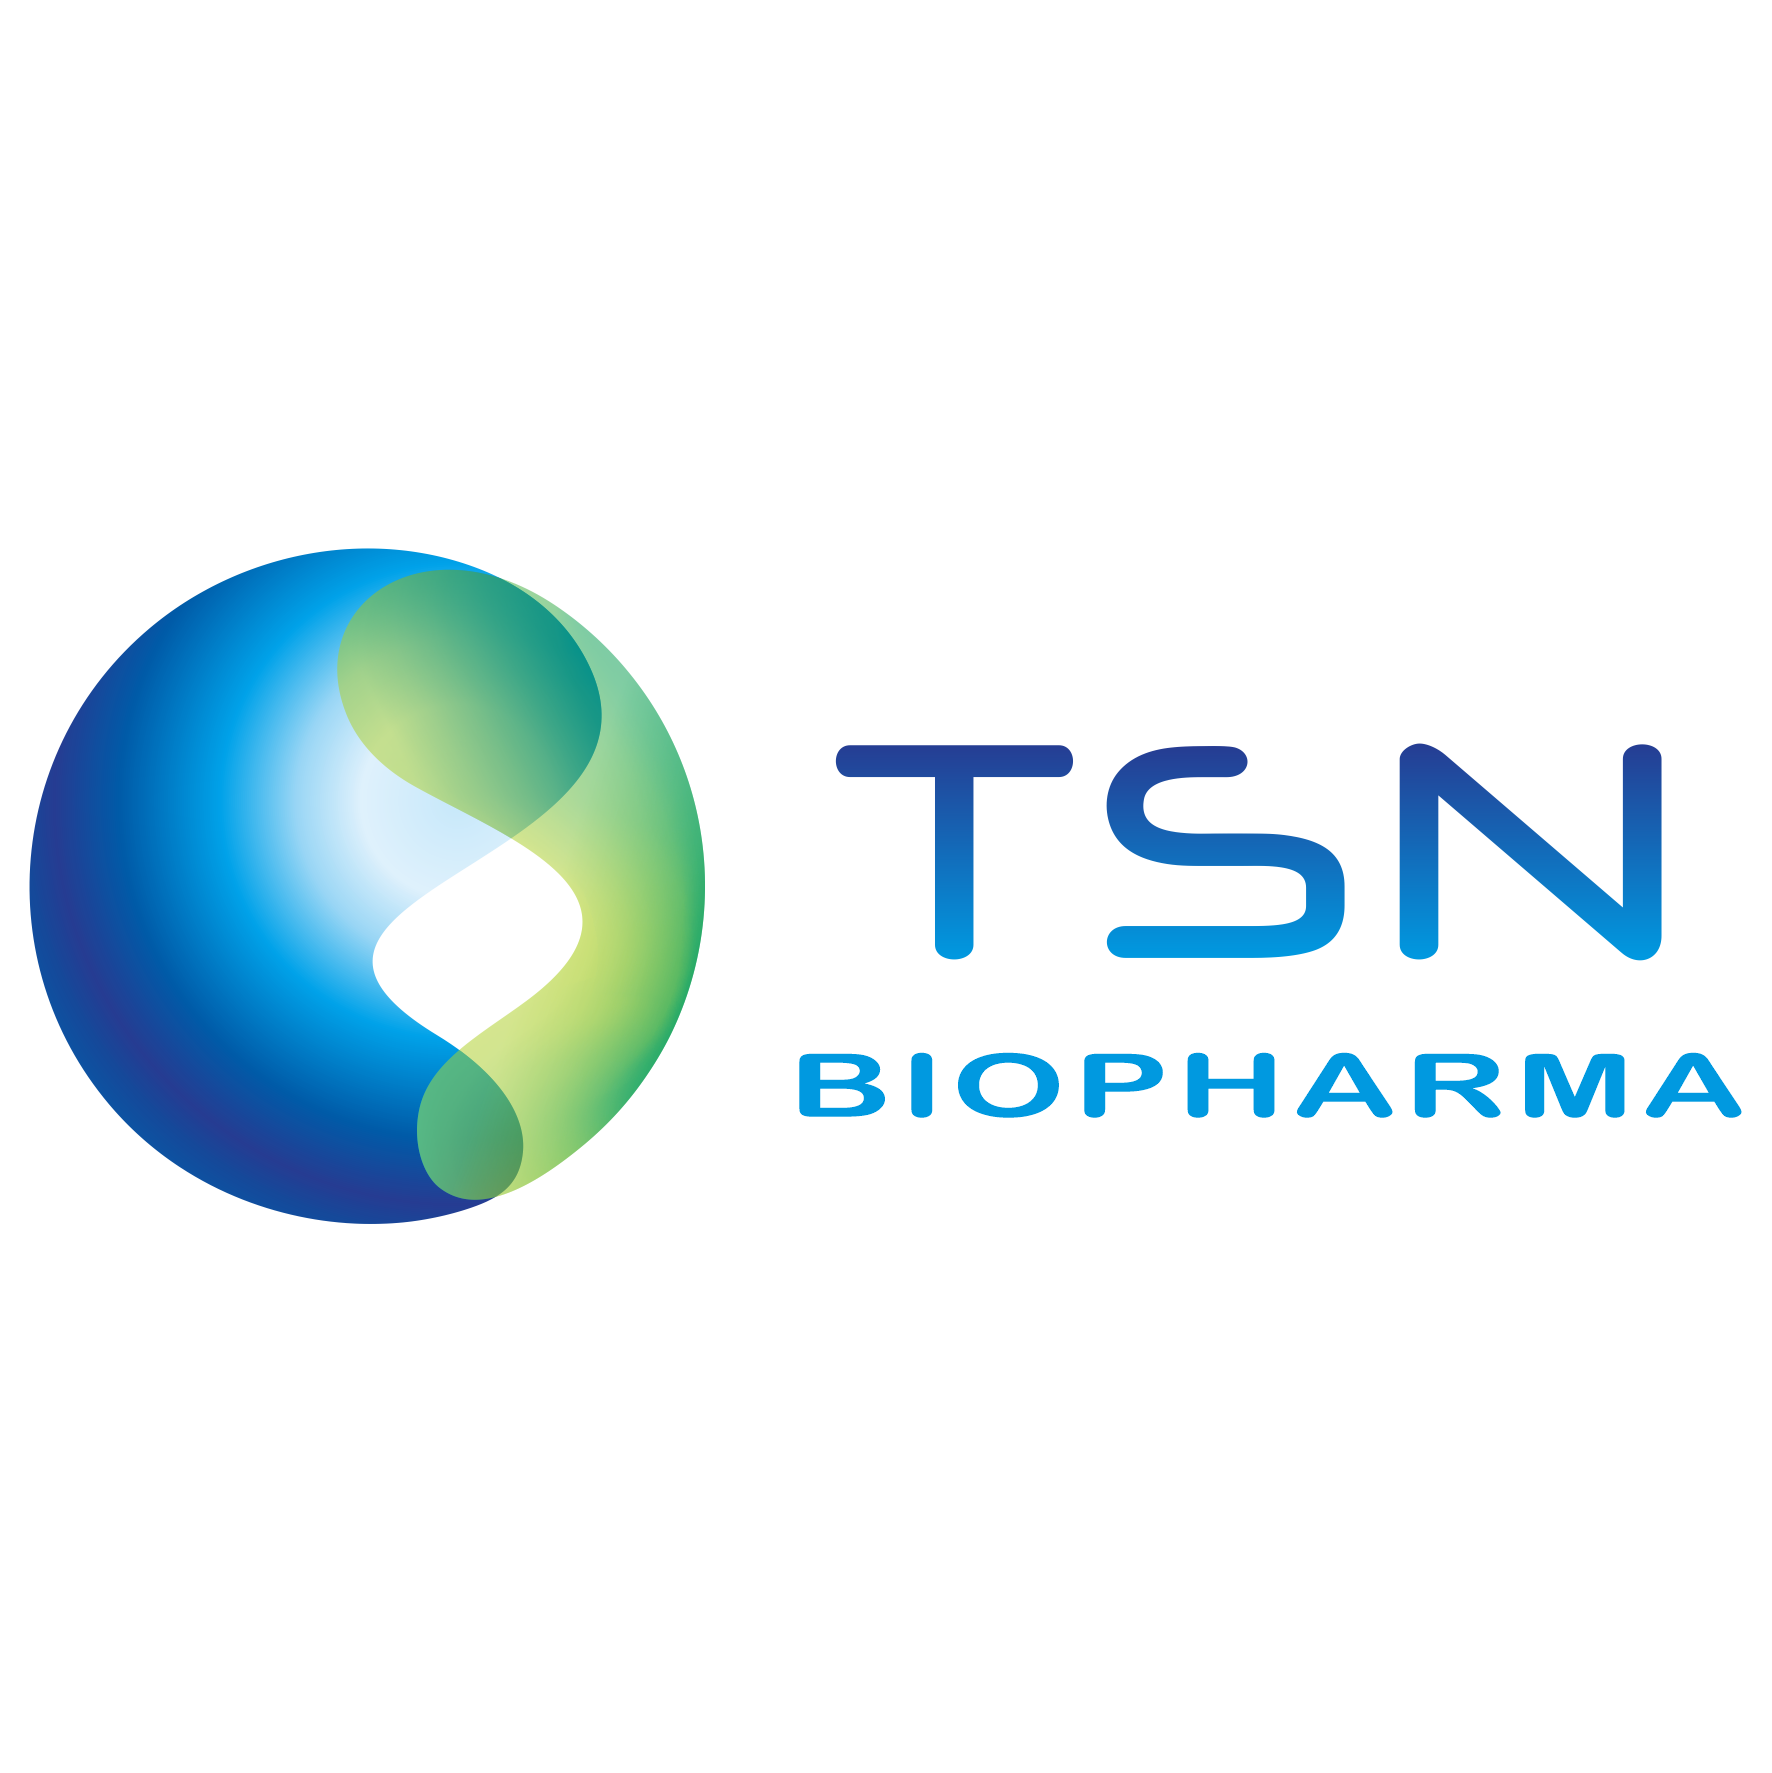 Your Global Pharmaceutical Partner: Hangzhou Tomson Biopharma